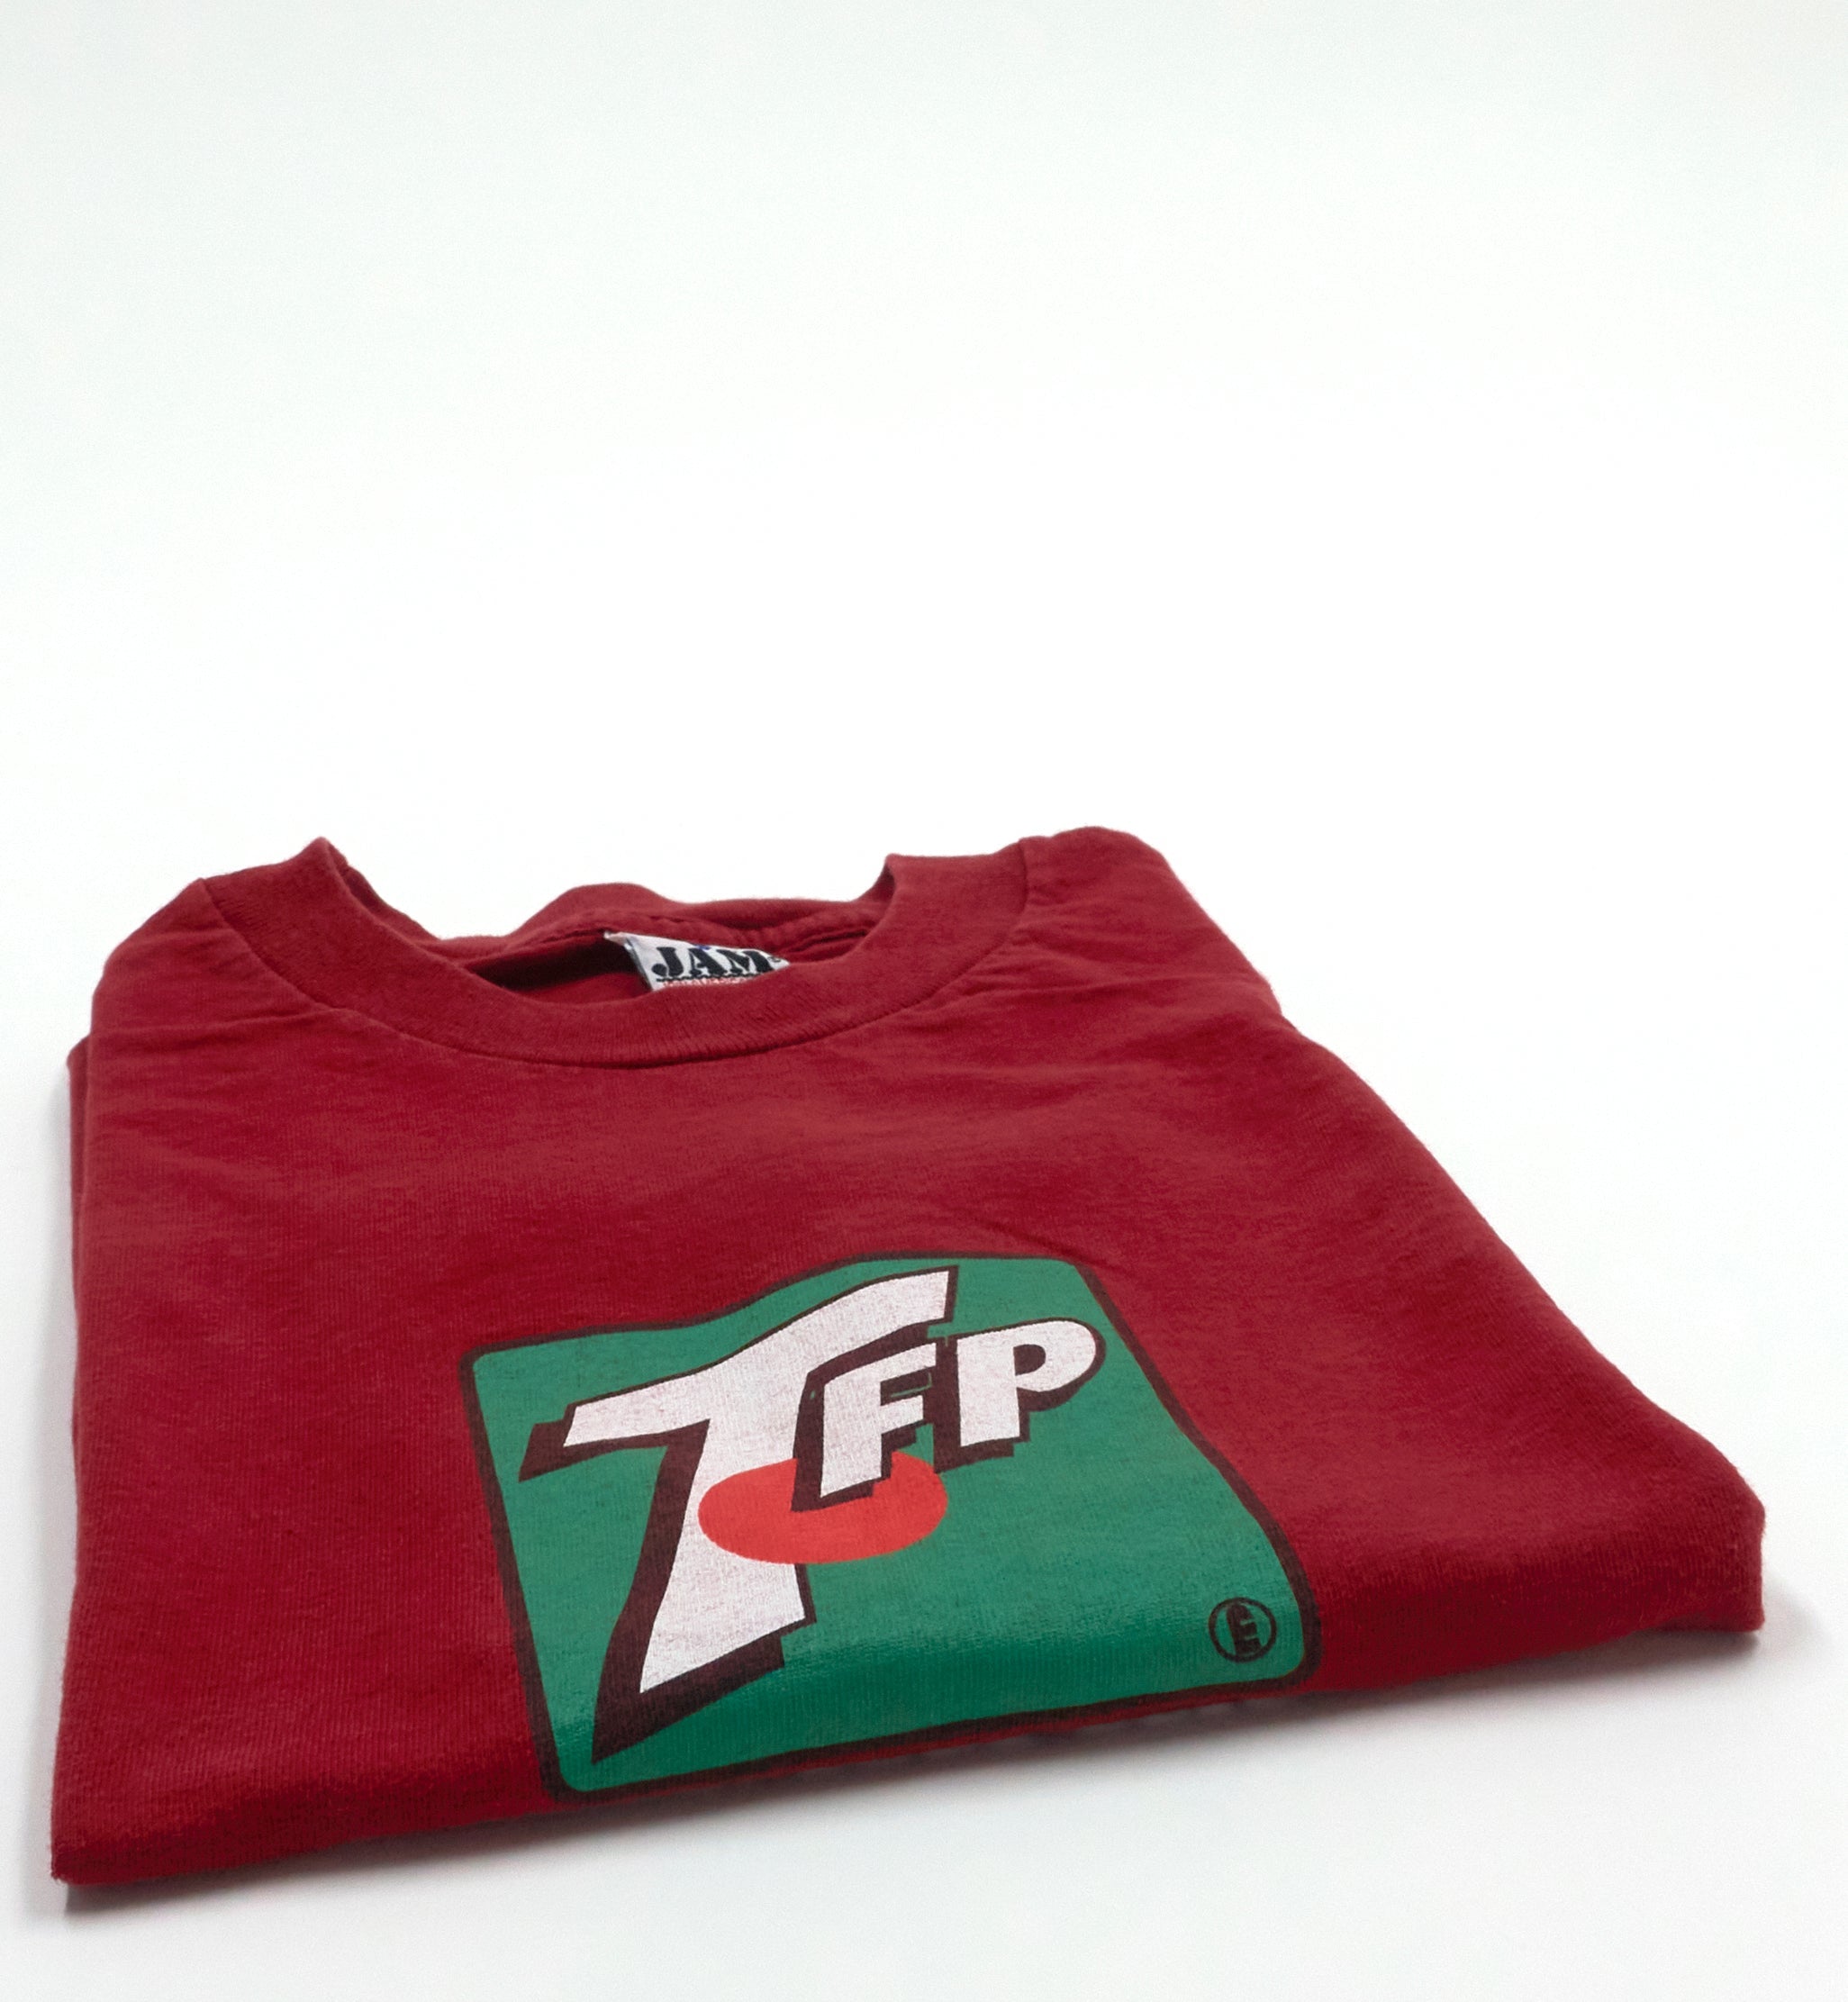 Ten Foot Pole ‎– 7UP Logo 90's Tour Shirt Size XL